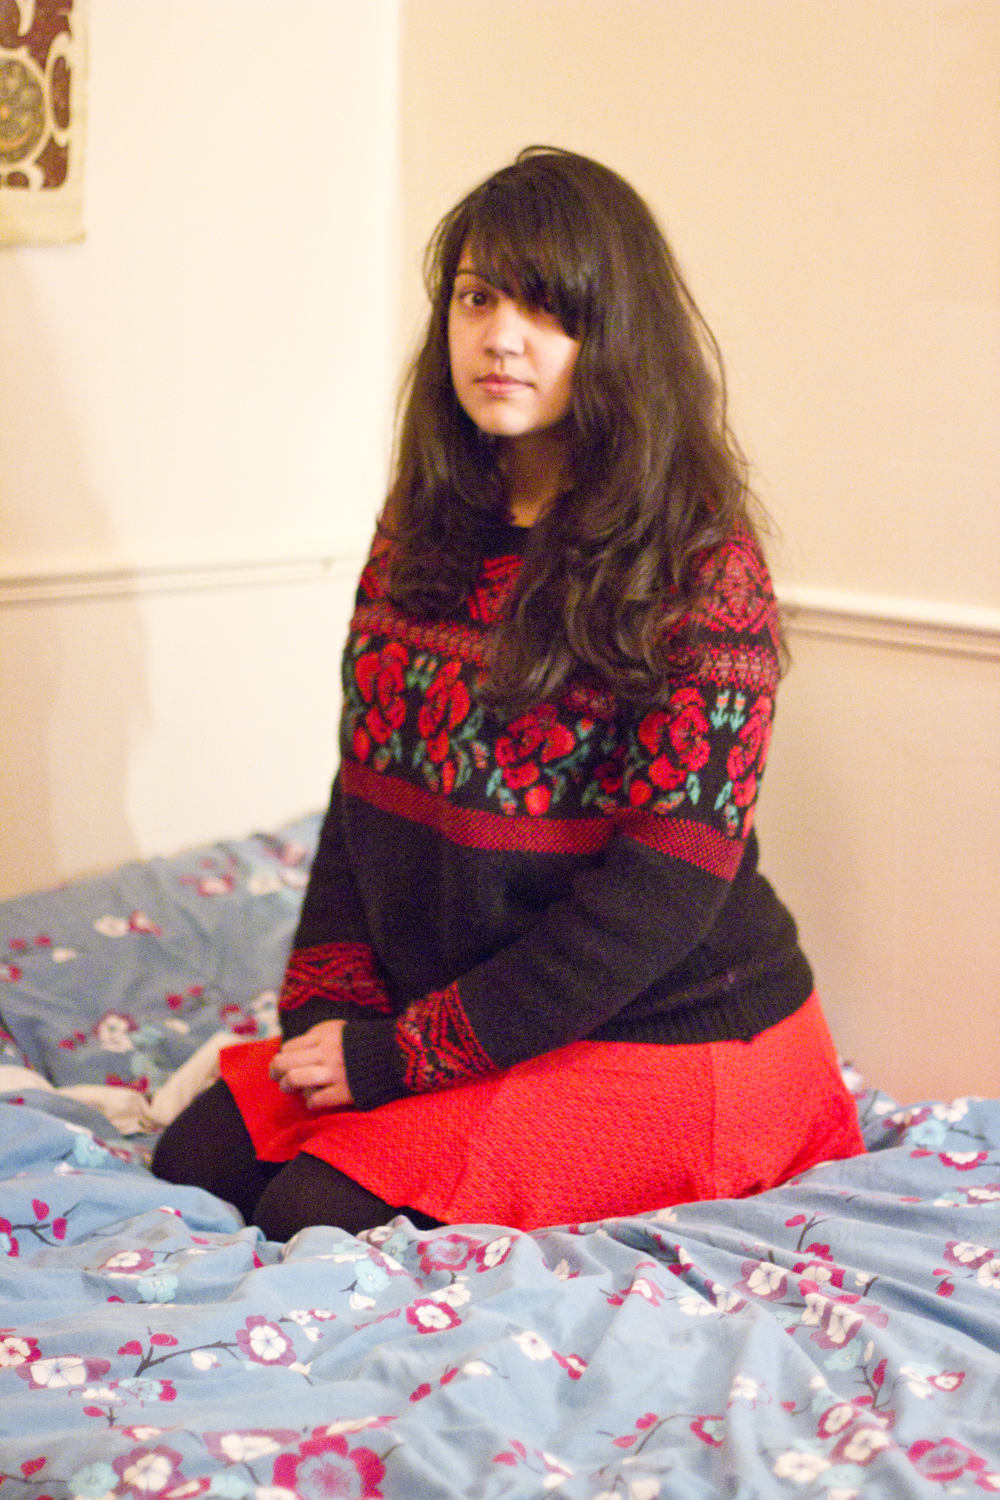 Laila tapeparade red skirt floral jumper feminism womanhood sisterhood feeling a part of something